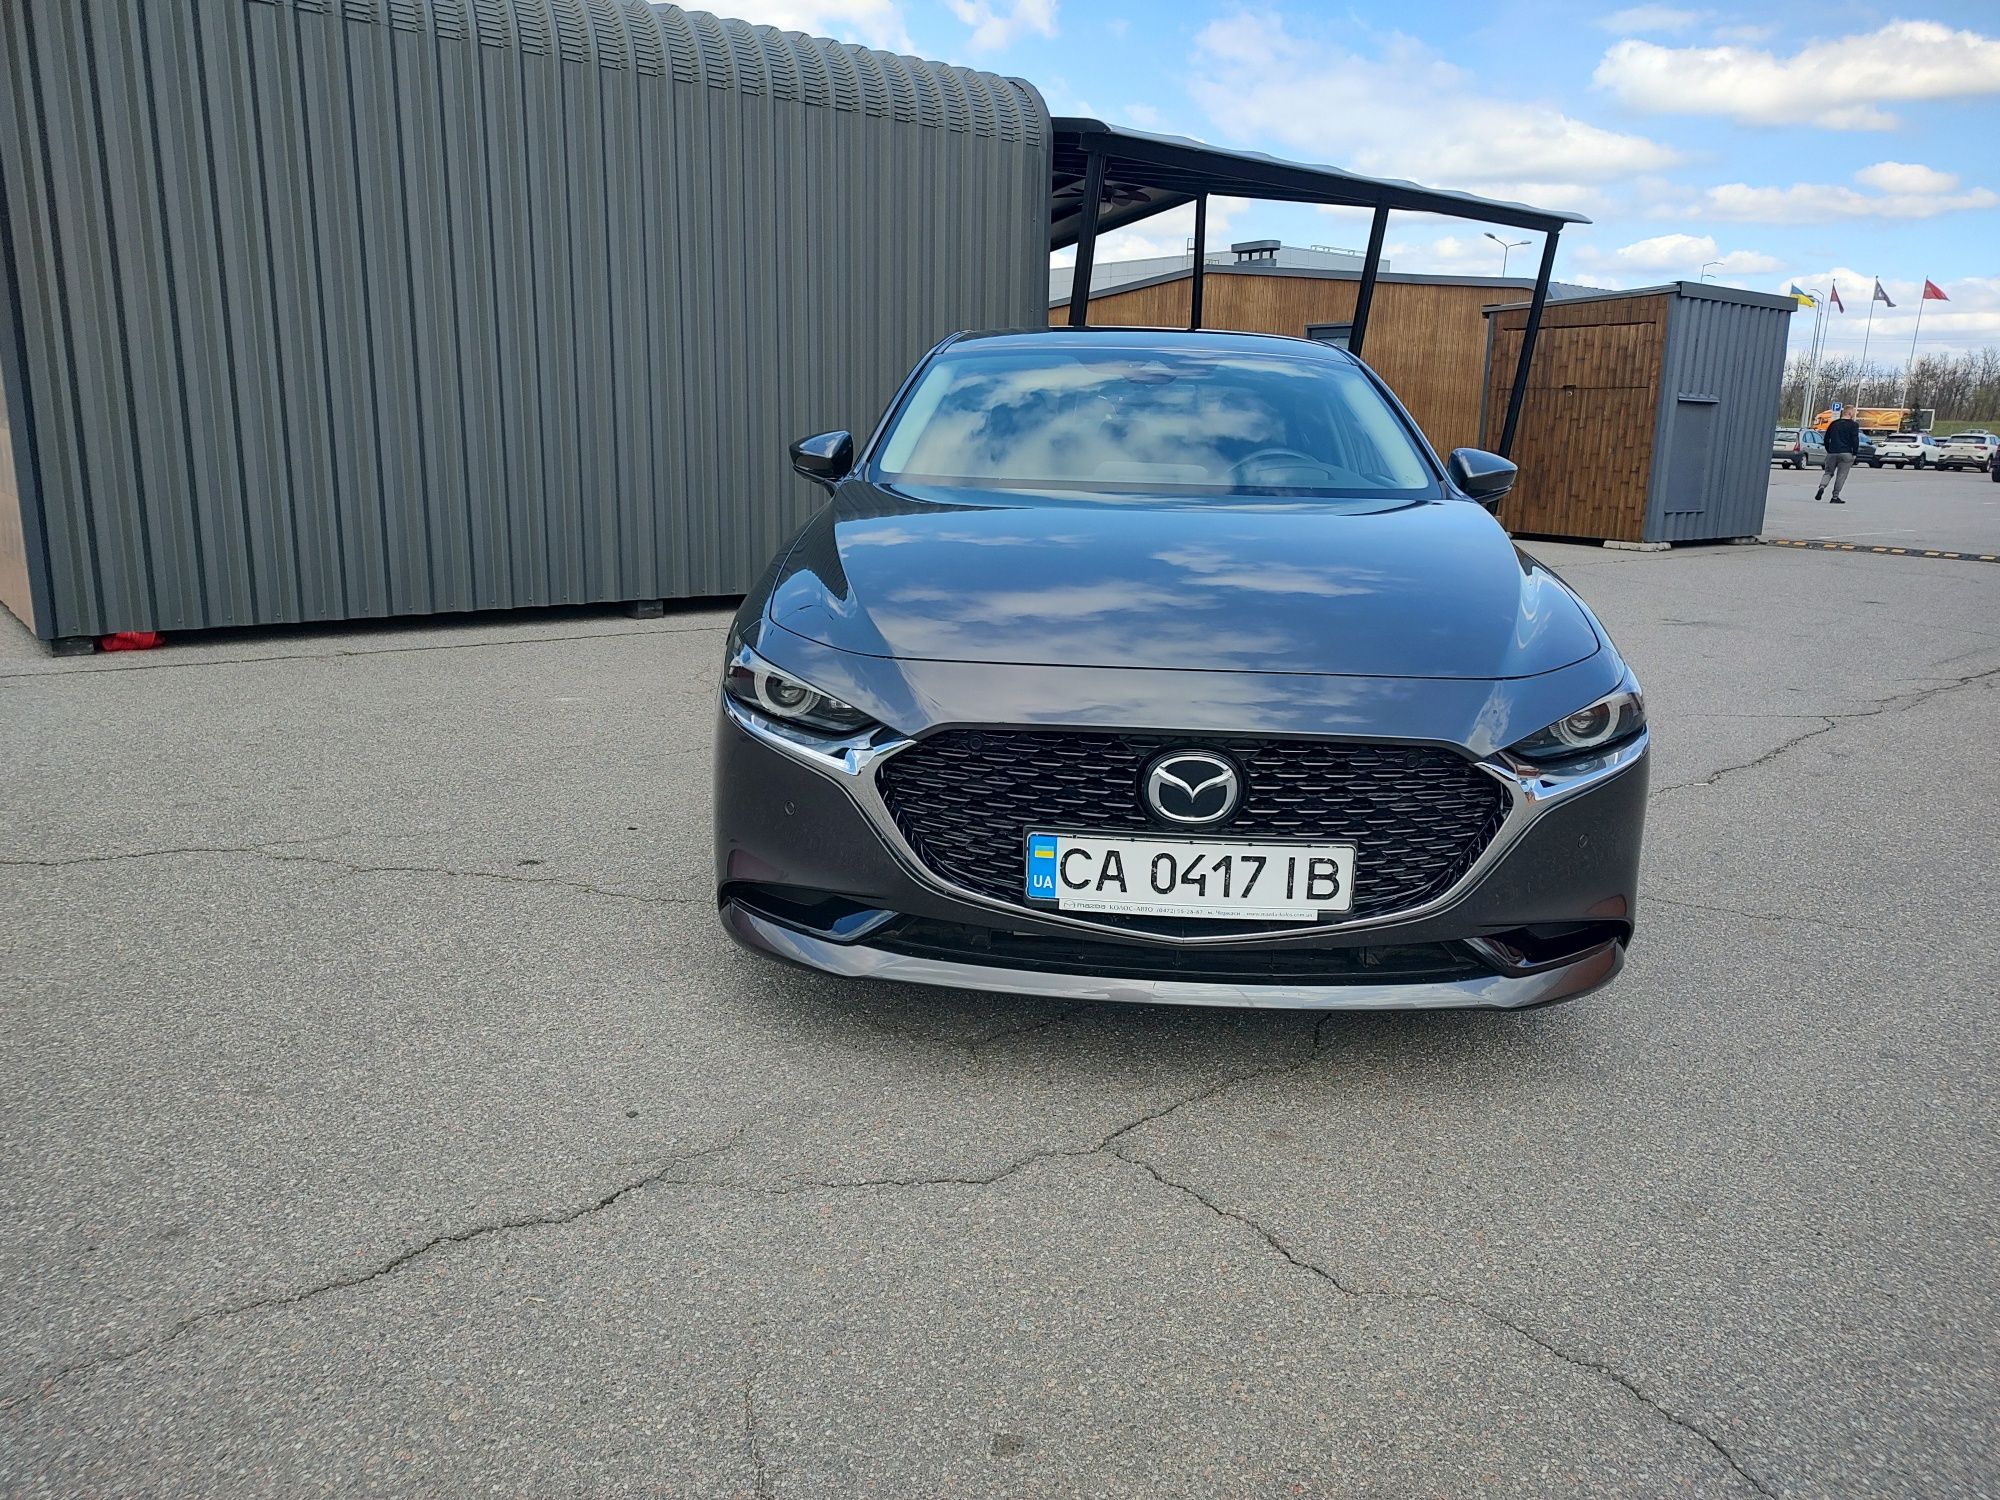 Mazda 3 2019р. Офіційна